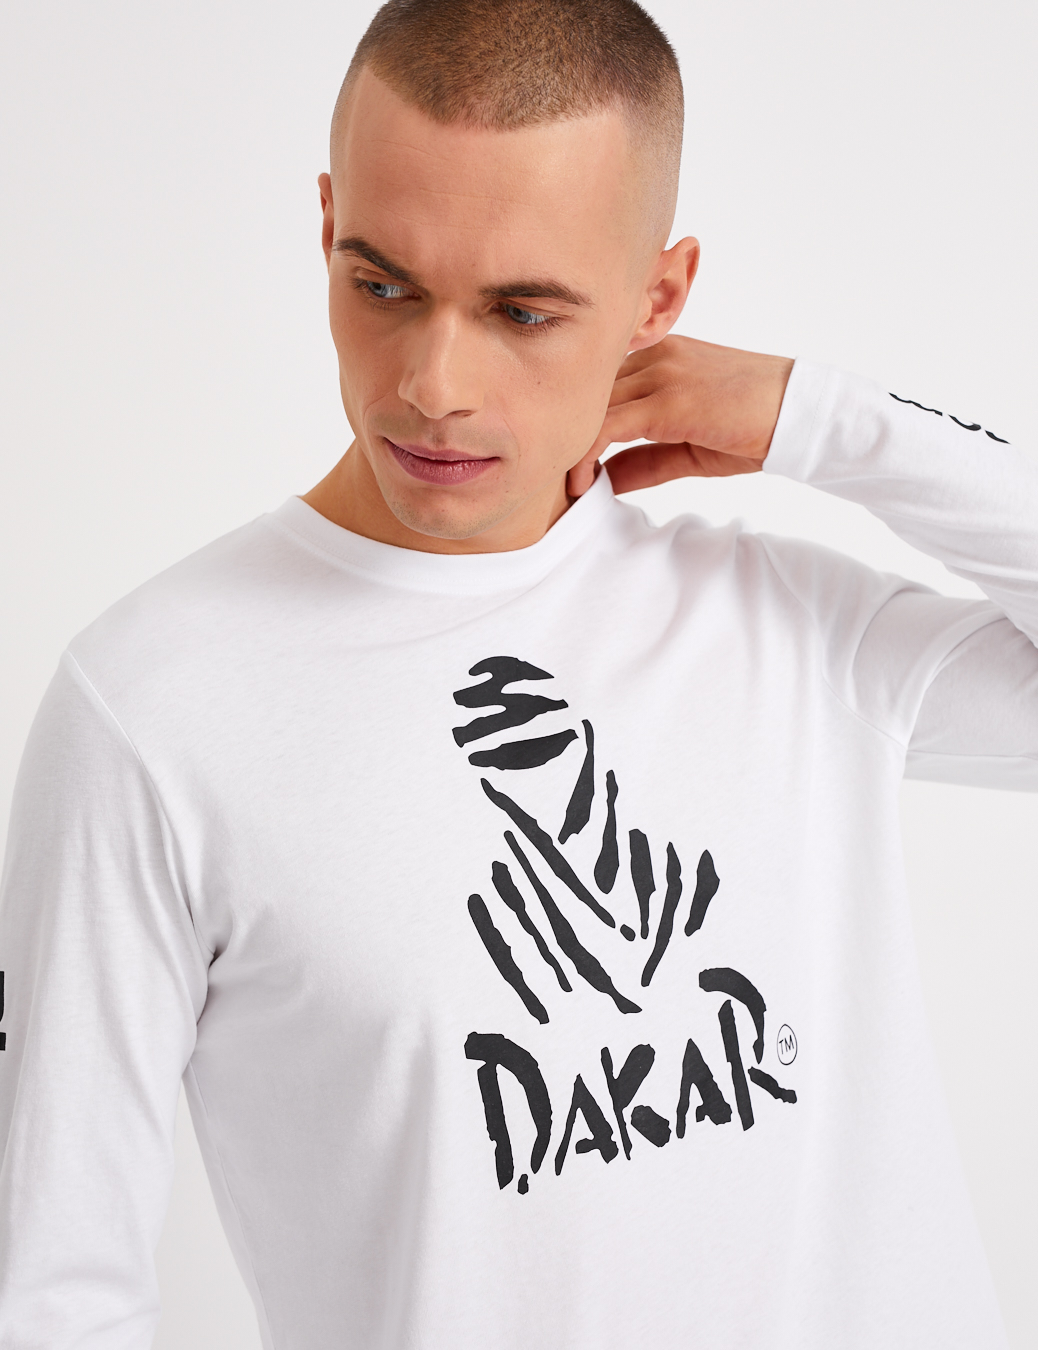 Longsleeve Shirt -  Dakar Logo, weiß